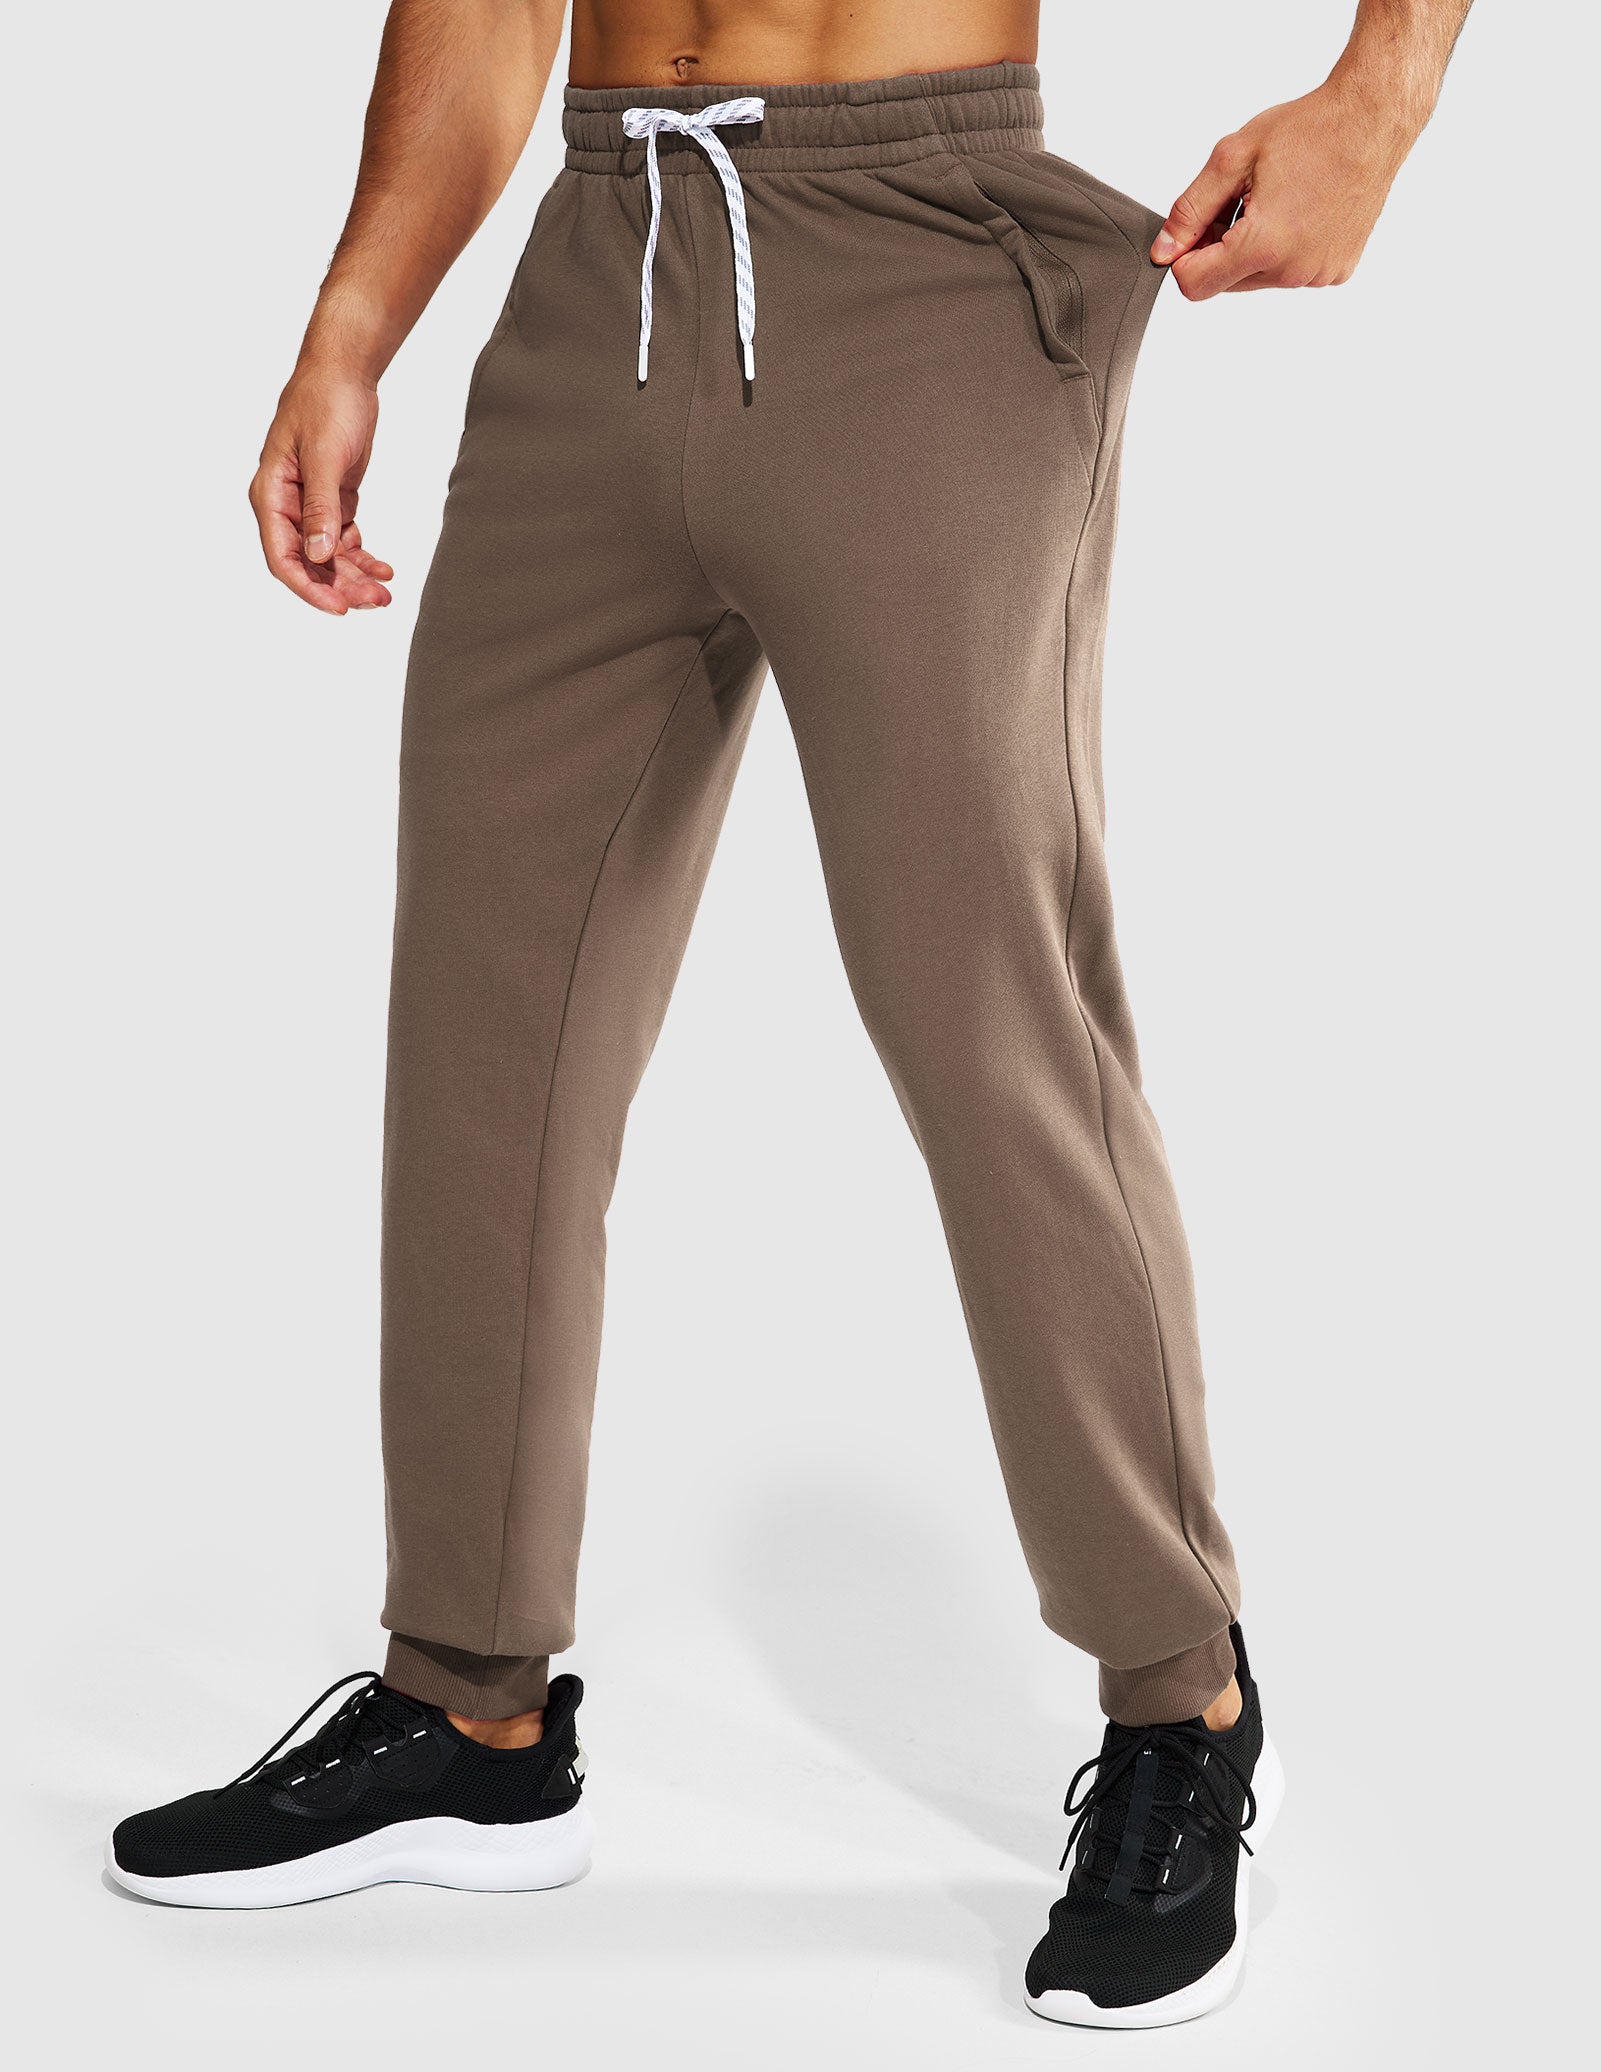 Men's Cotton Joggers Athletic Sweatpants with Pockets